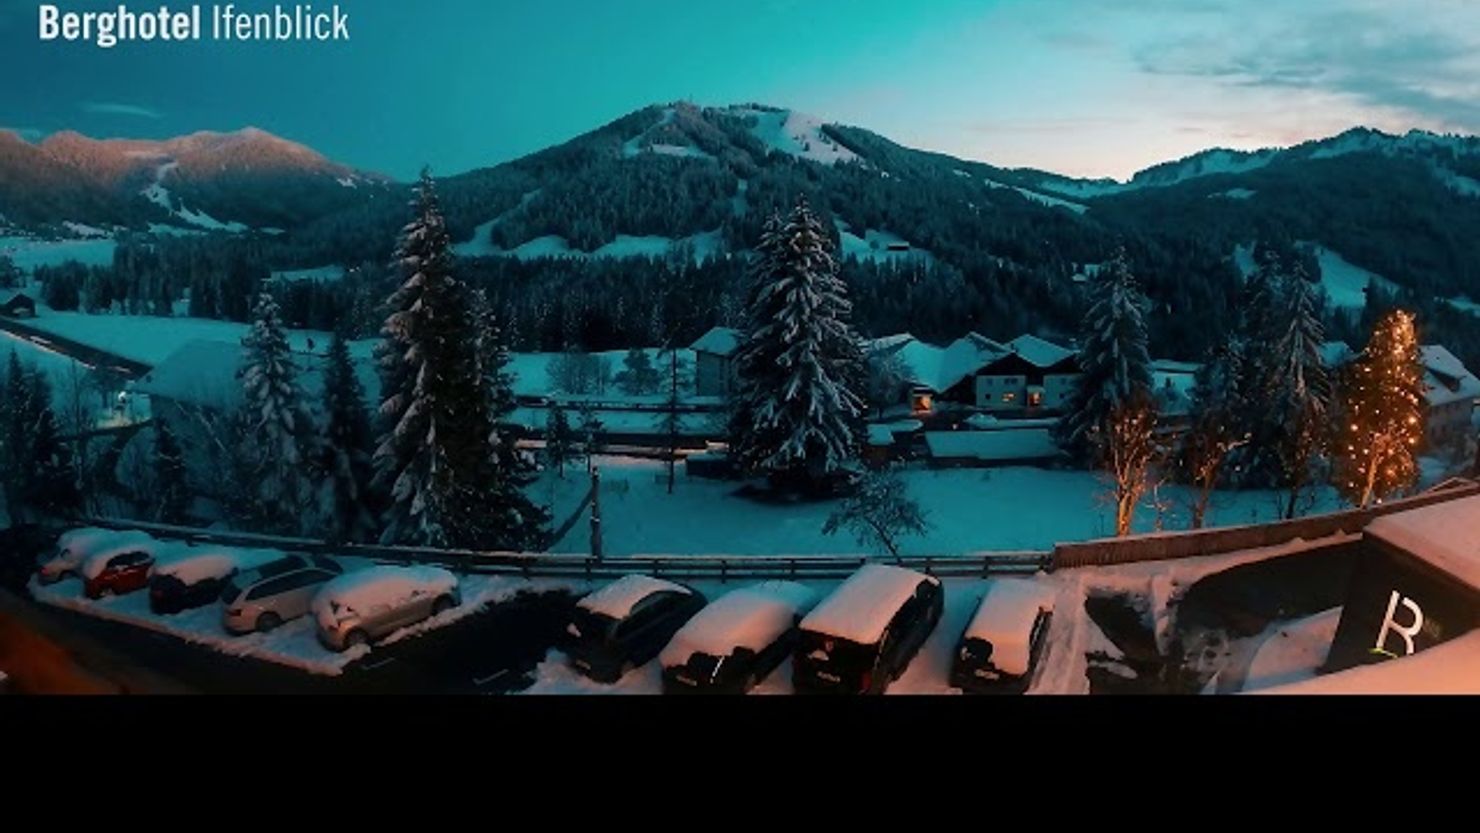 Video: Berghotel Ifenblick #2